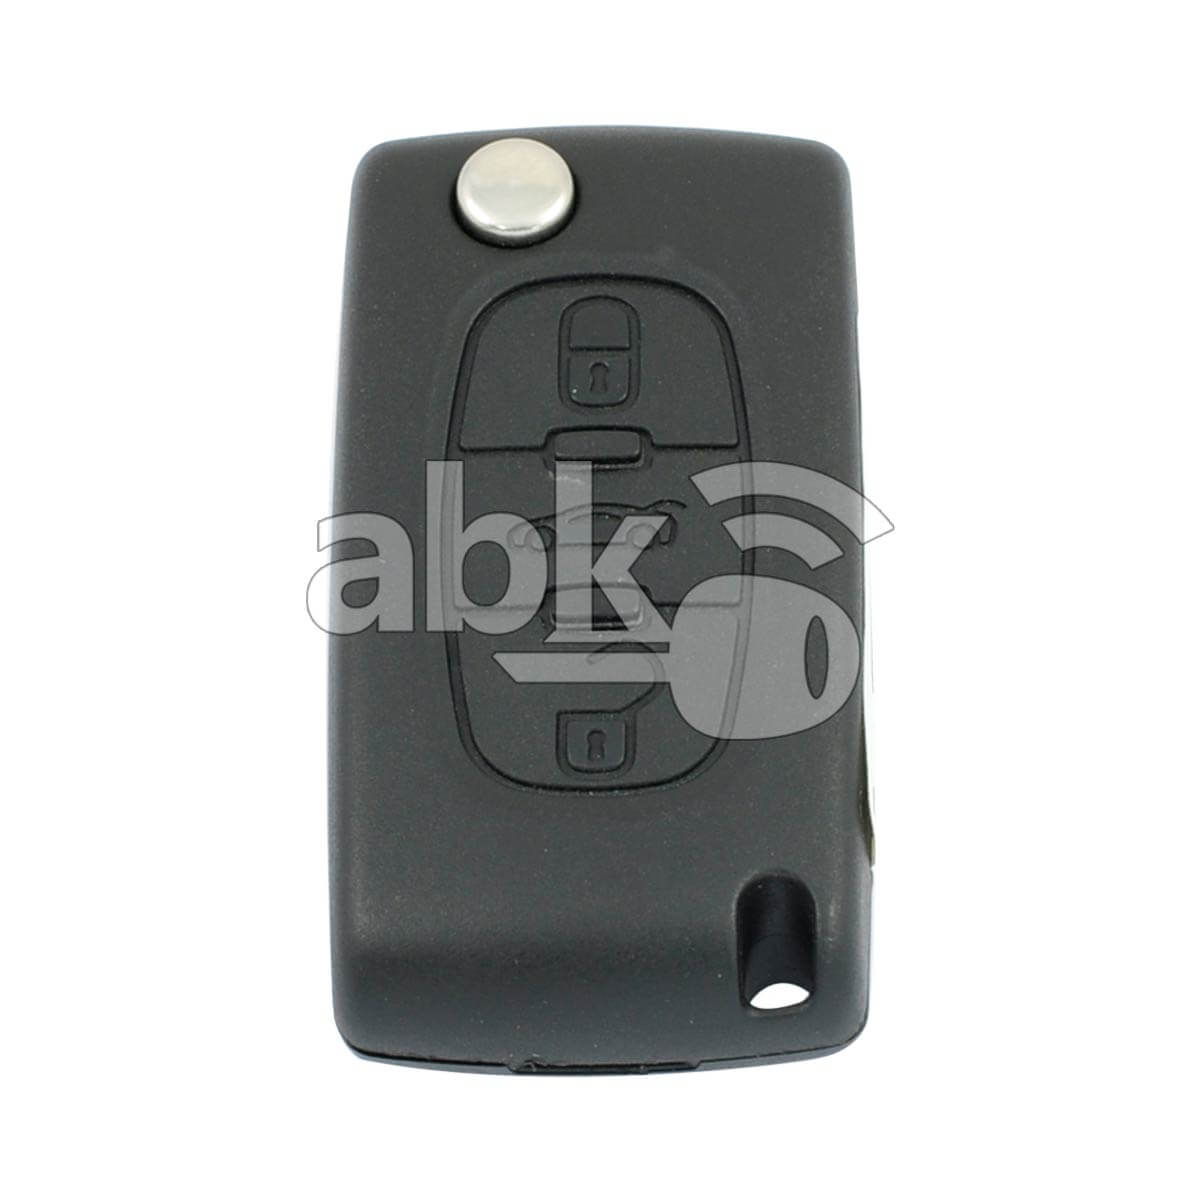 Shell Key Rks Remote Peugeot Partner Expert CE0536 3 Buttons